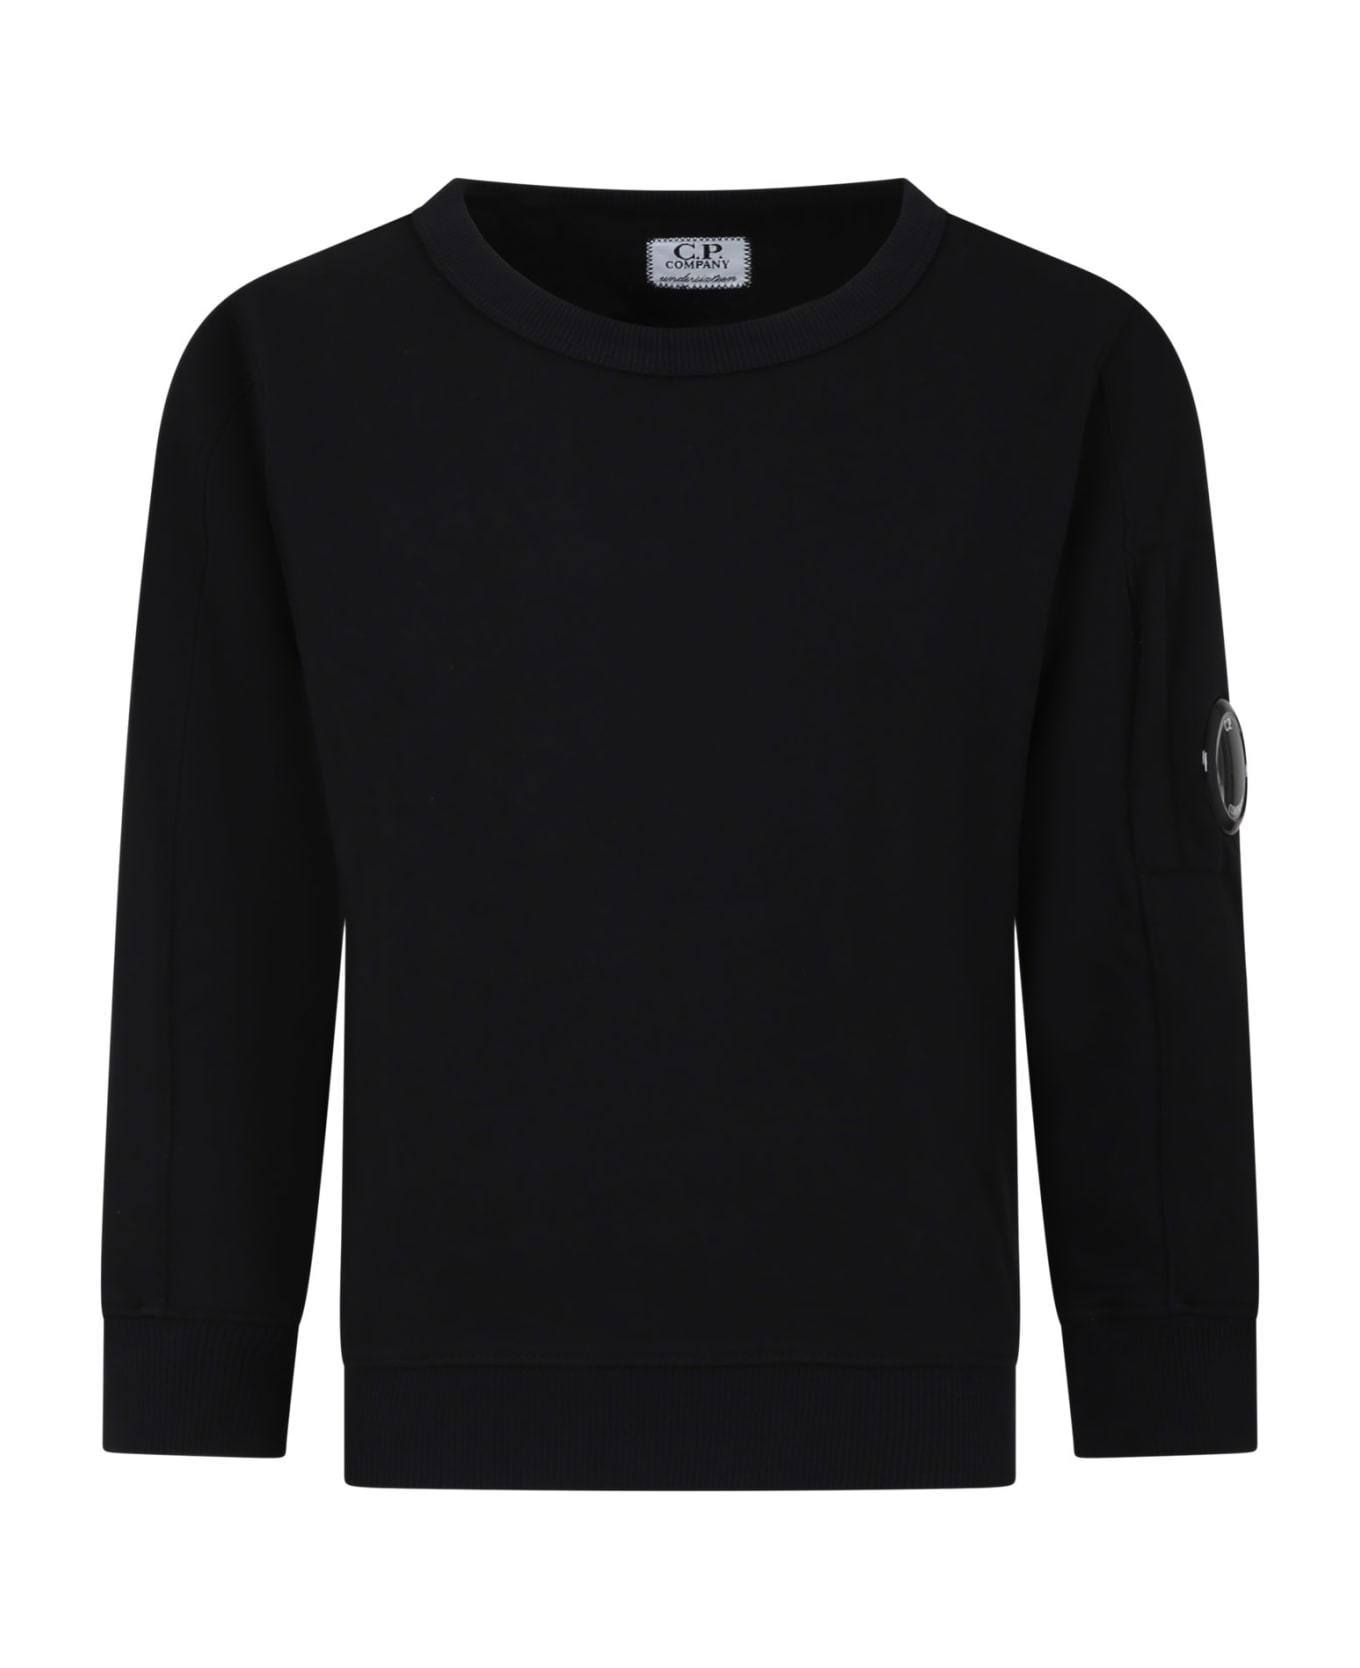 C.P. Company Undersixteen Black Sweatshirt For Boy With C.p. Company Lens - Black